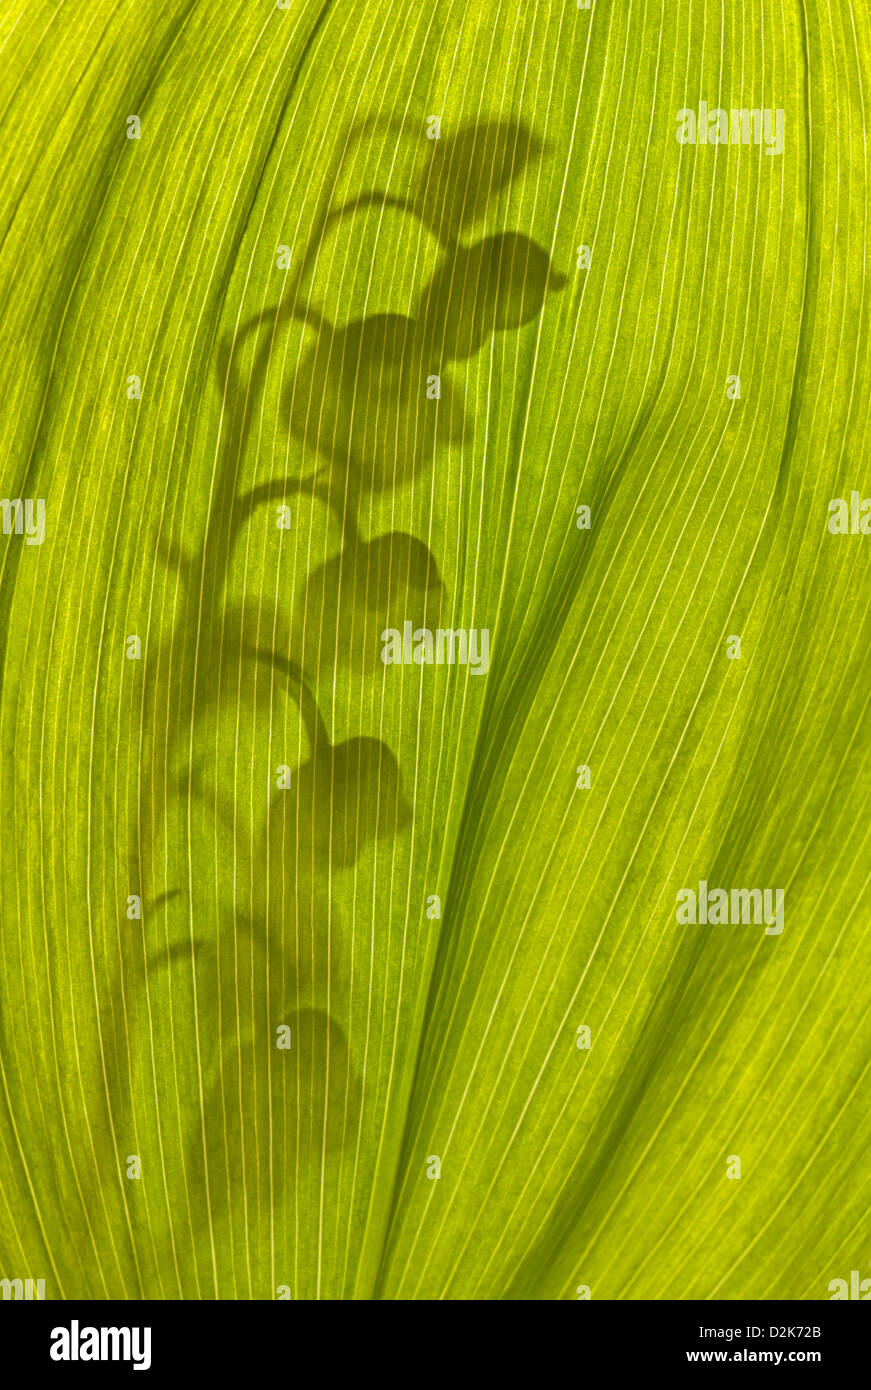 Lily of the valley / Convallaria majalis Stock Photo